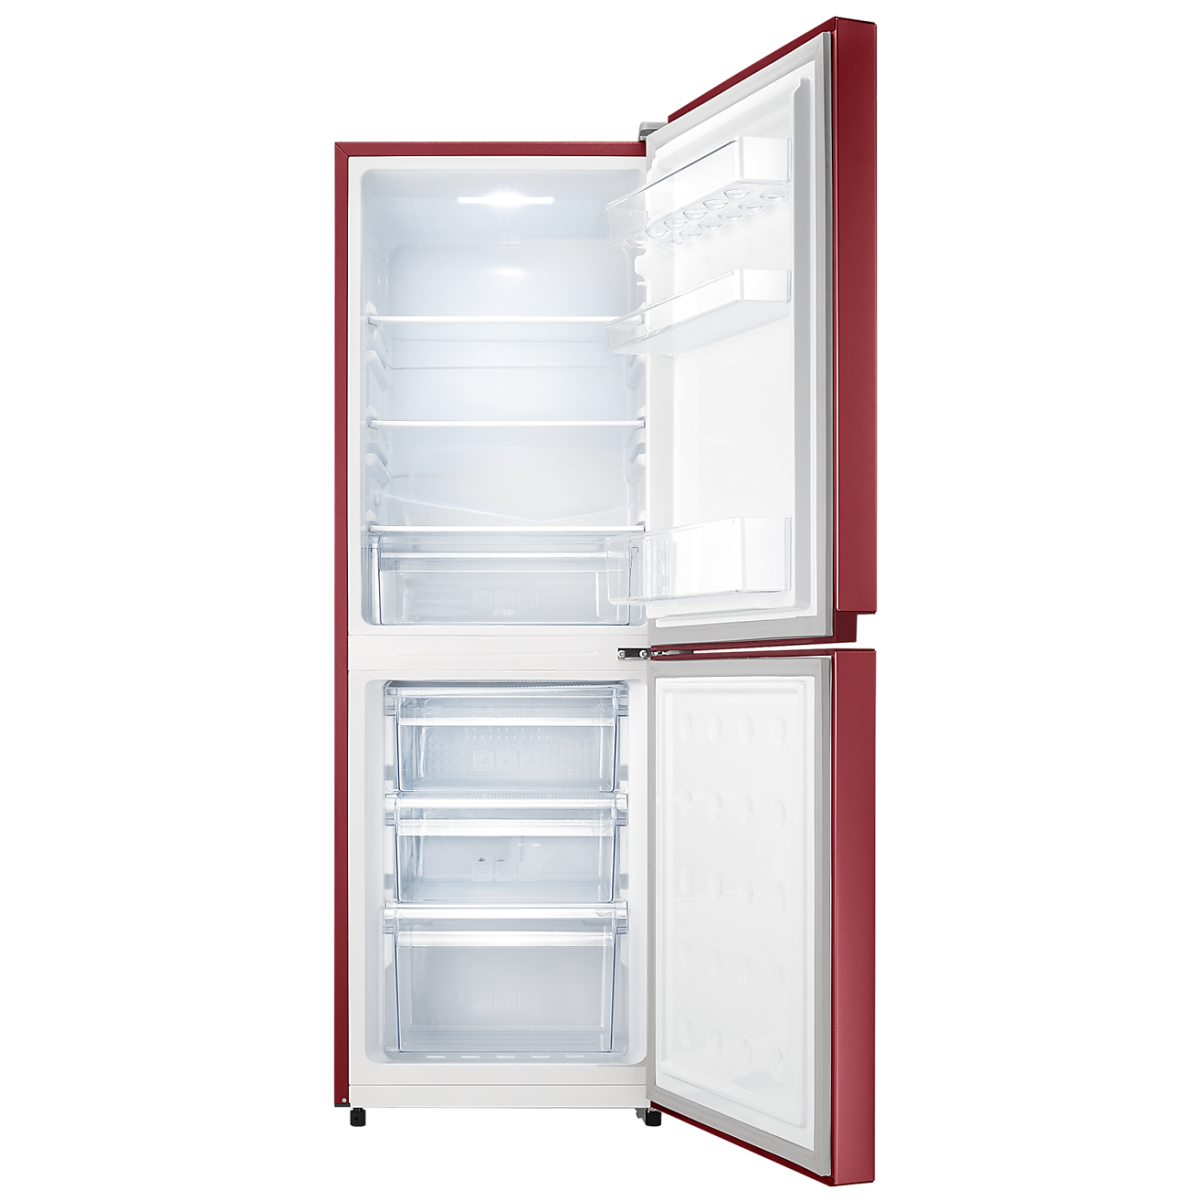 SAMSUNG 218 Liter Refrigerator with Digtial Inverter Technology RB21KMFH5RH/D3 , Best Refrigerators of Year, Top-rated Refrigerators, Refrigerator Reviews, Refrigerator Comparison, Buying a Refrigerator Guide, Refrigerator Deals and Offers